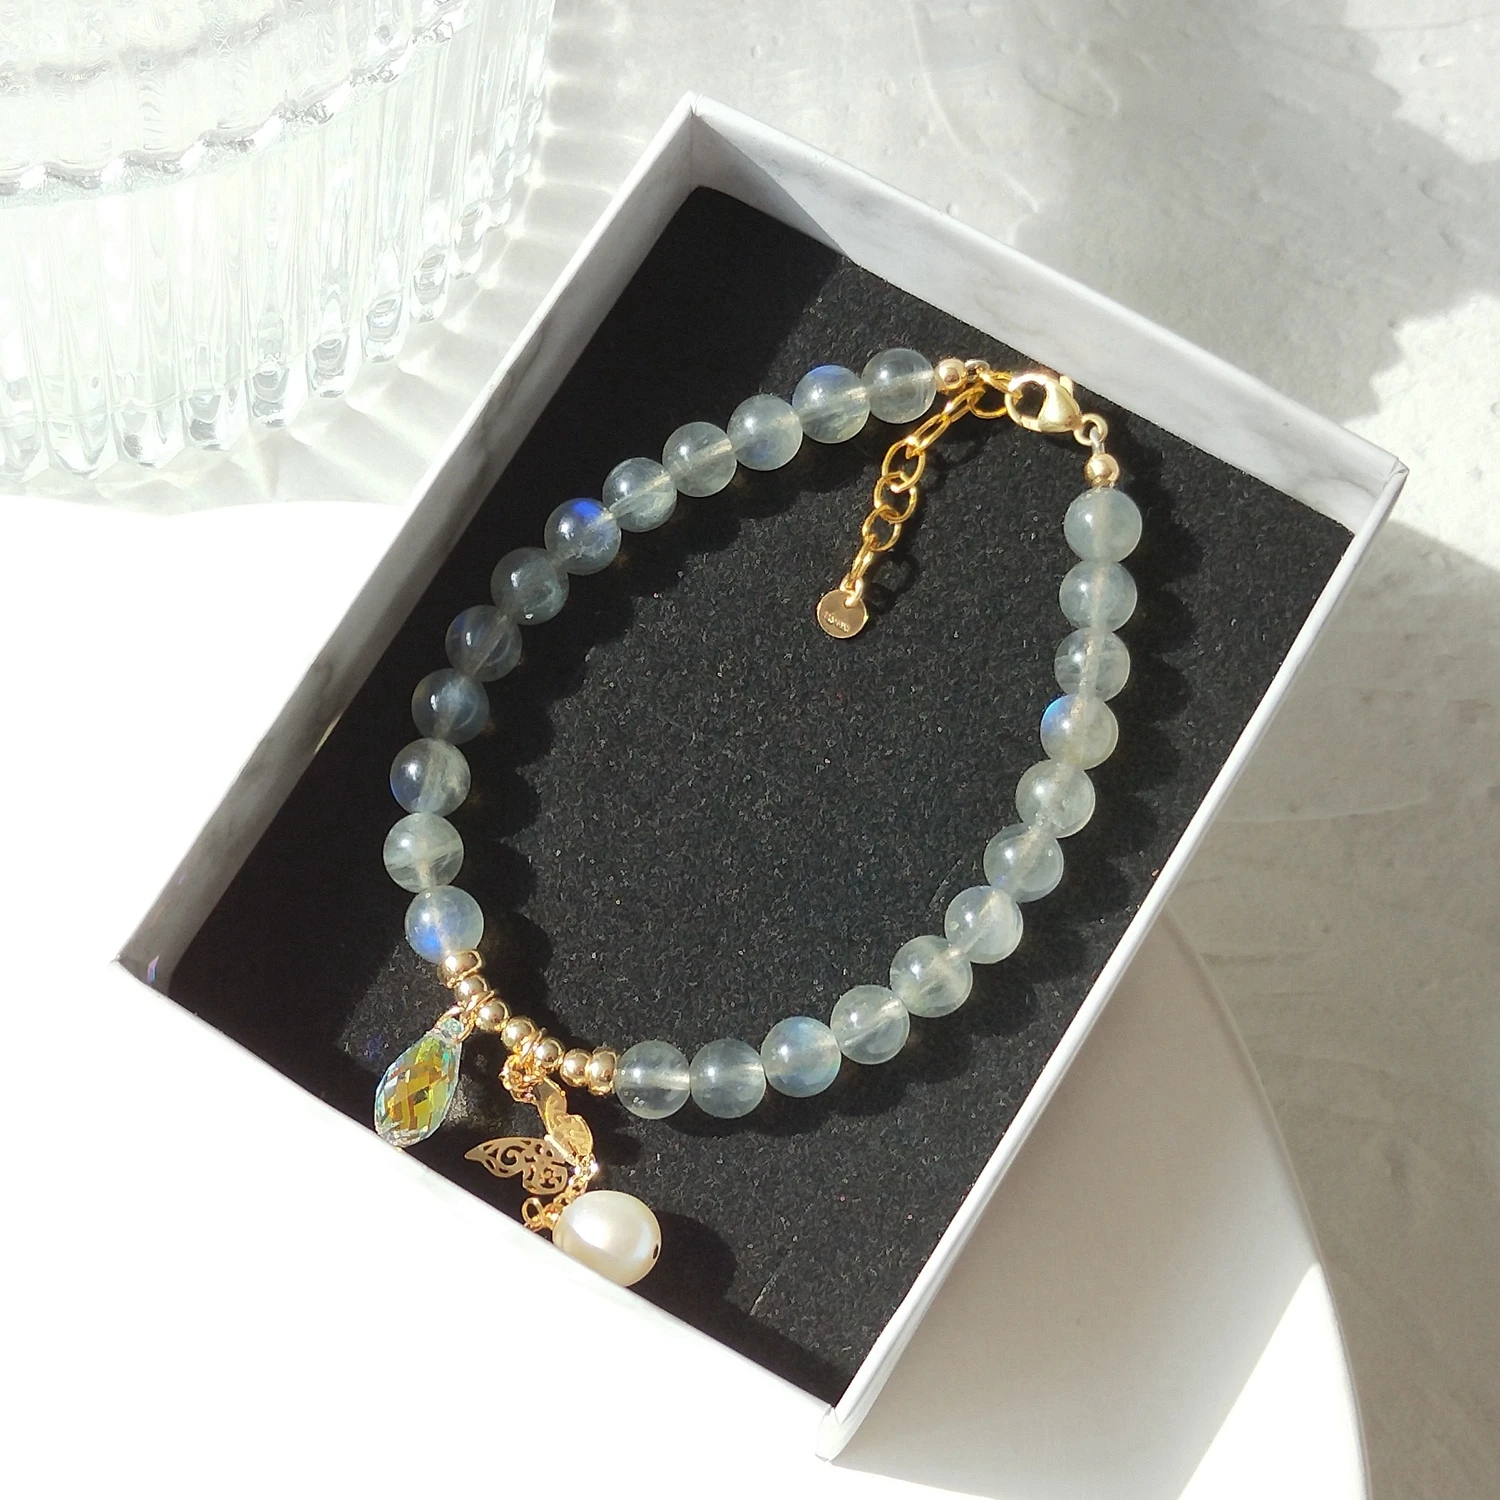 Lii Ji Labradorite Natural Stone 14K Gold Filled Charm Bracelet Gold Luxurious Fashion Jewelry For Women Girls Gift 4